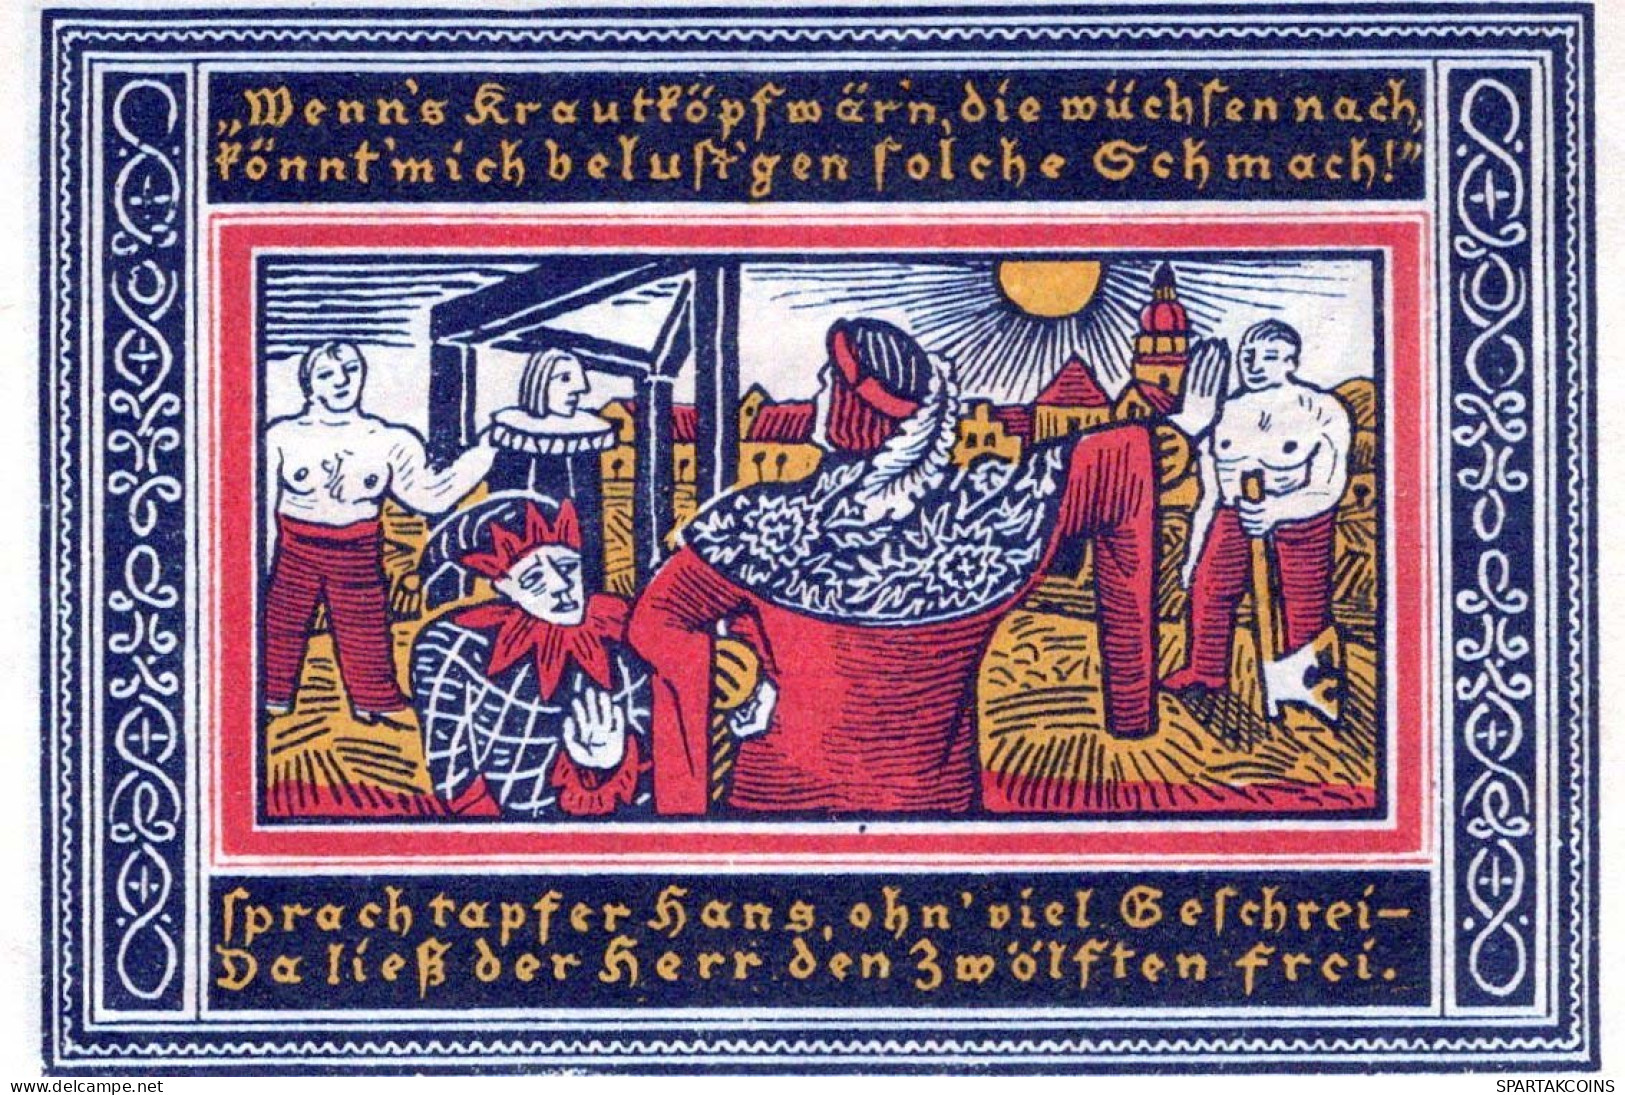 50 PFENNIG 1921 Stadt ETTLINGEN Baden UNC DEUTSCHLAND Notgeld Banknote #PB362 - [11] Local Banknote Issues